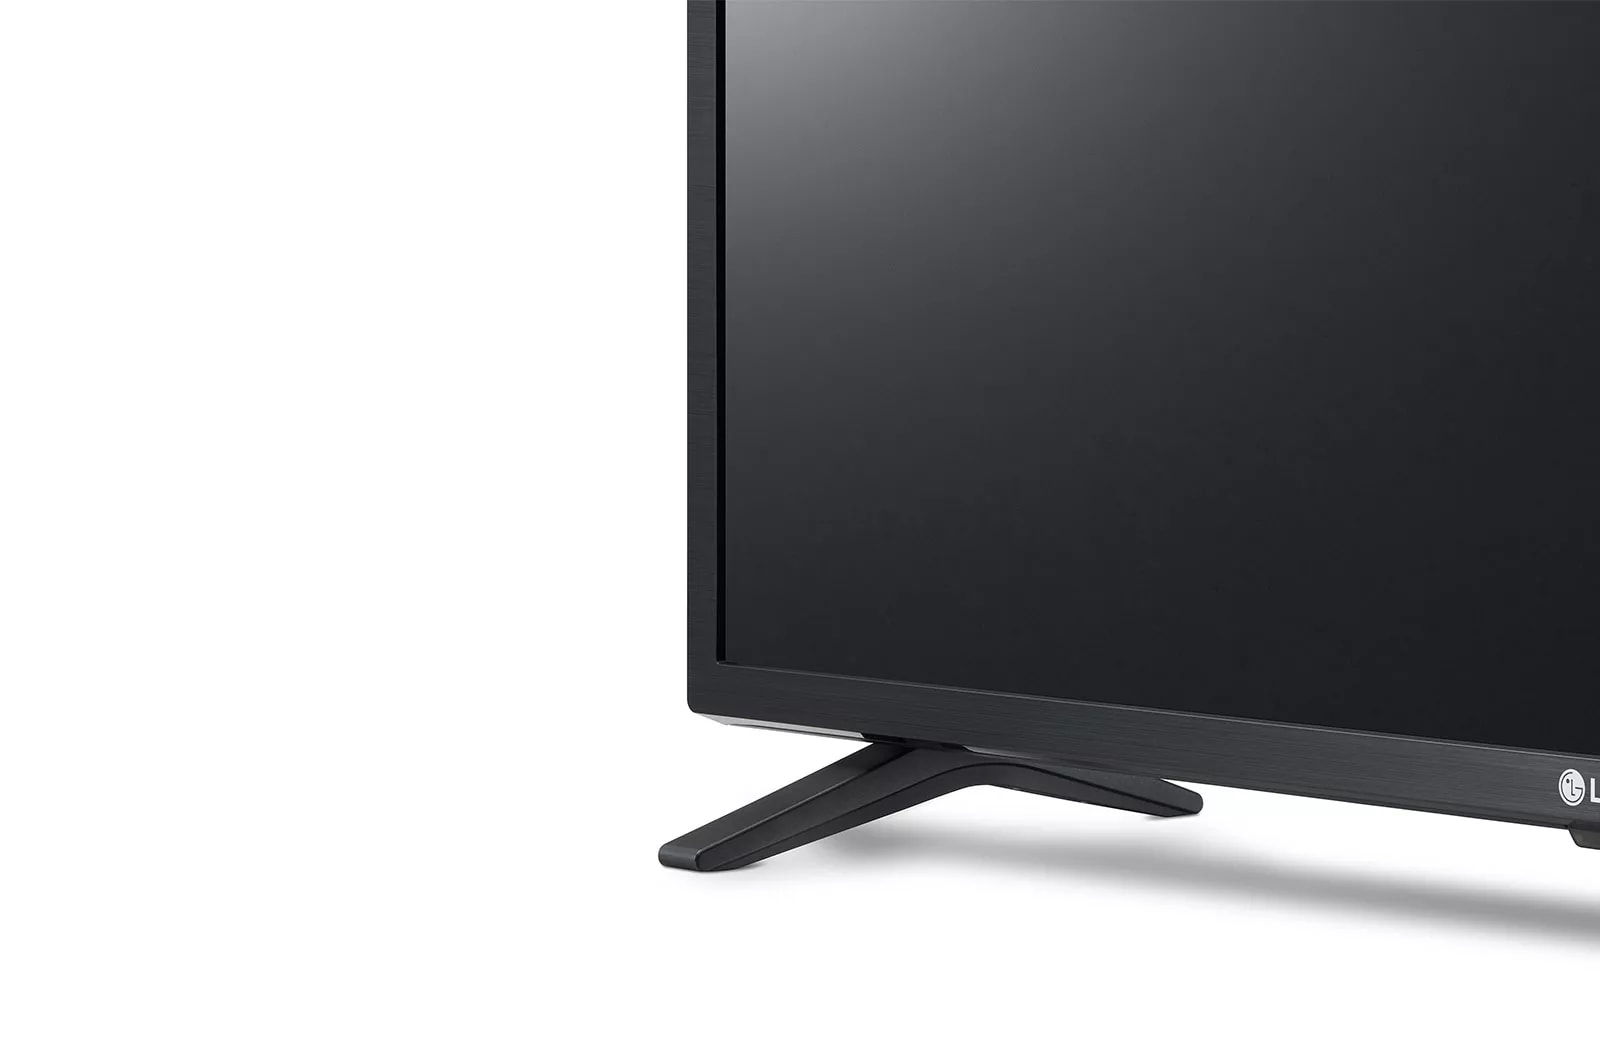 Tv LG de 32 pulgadas led HDR bluetooth smart tv modelo 32LM630B Santa Cruz